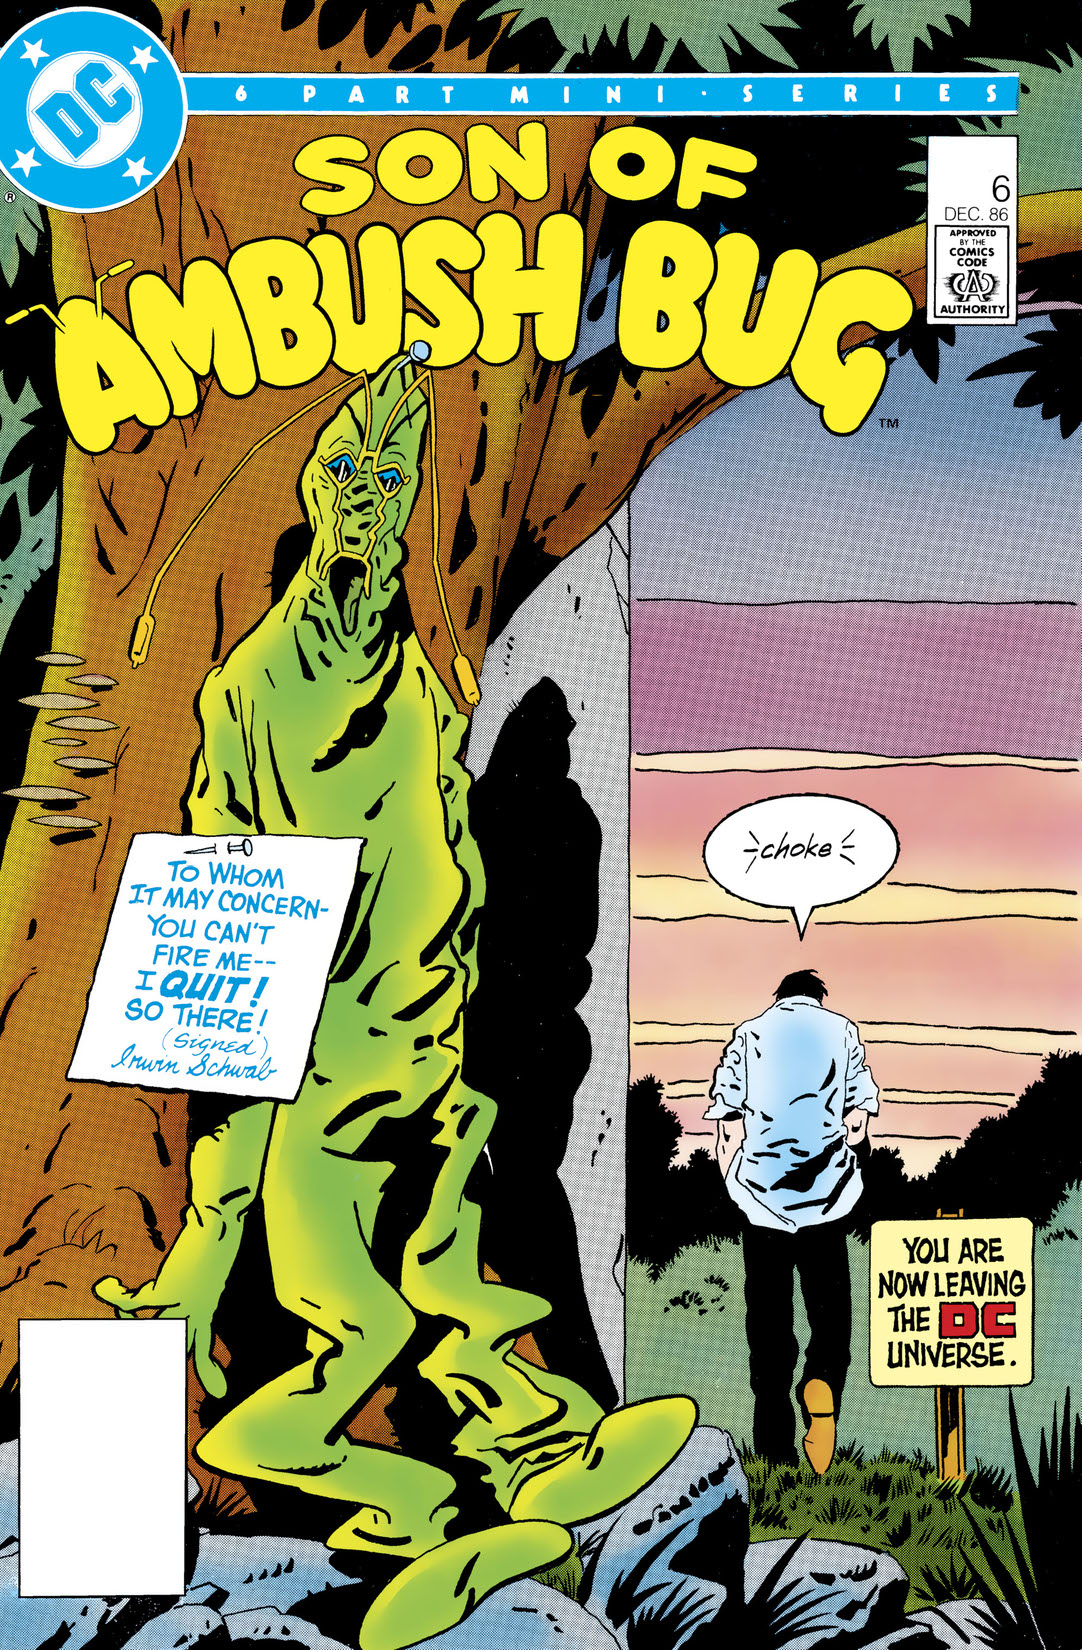 Son of Ambush Bug #6 preview images